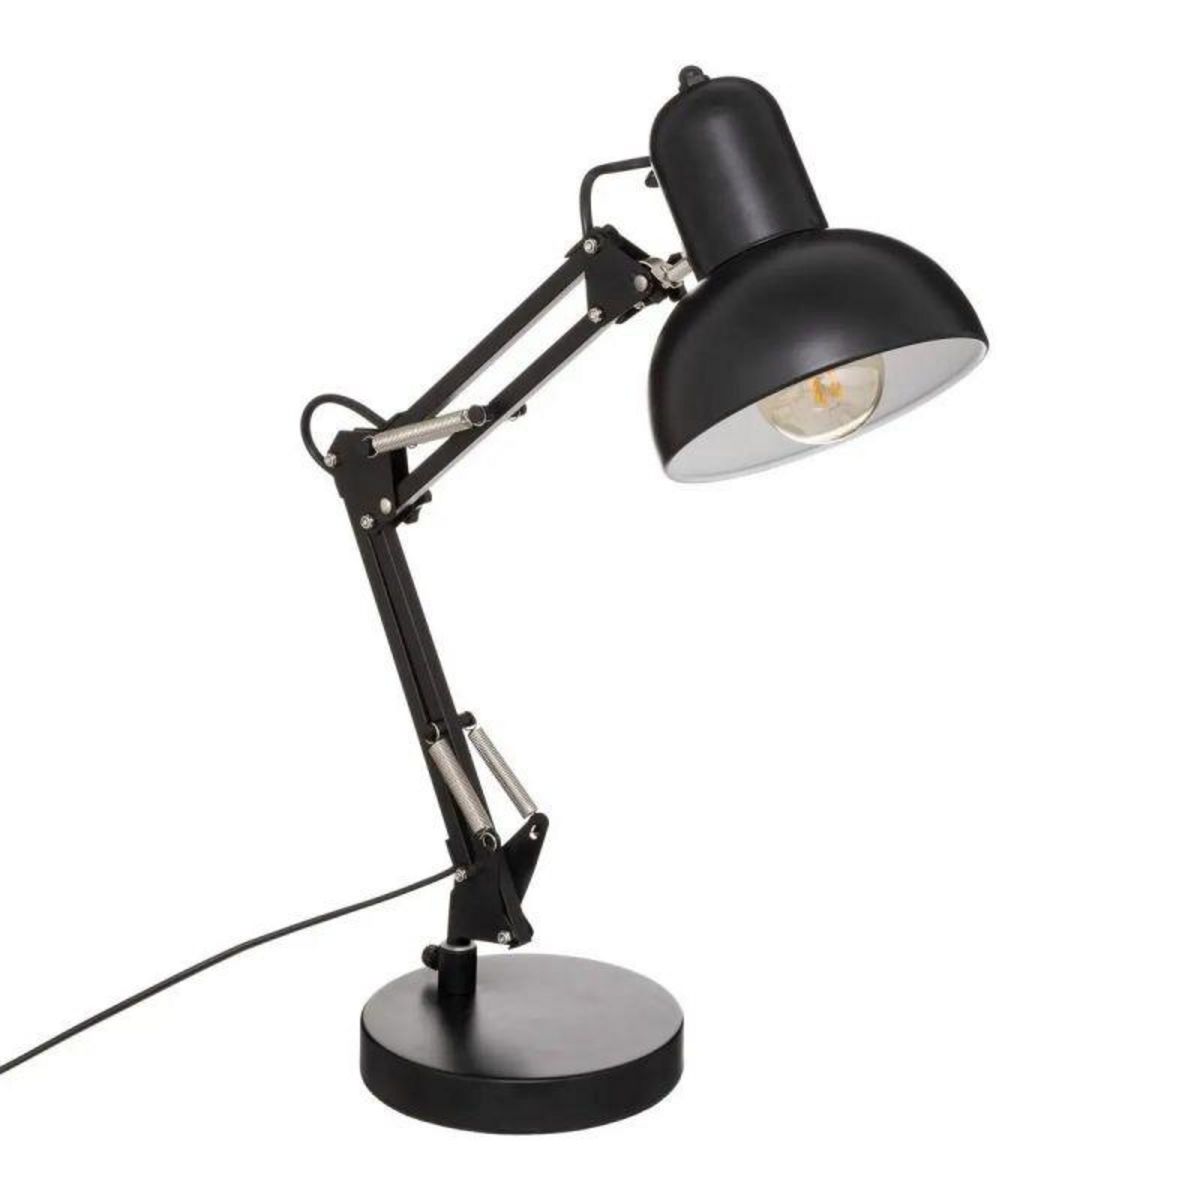  Lampe à Poser Design  Bren  55cm Noir